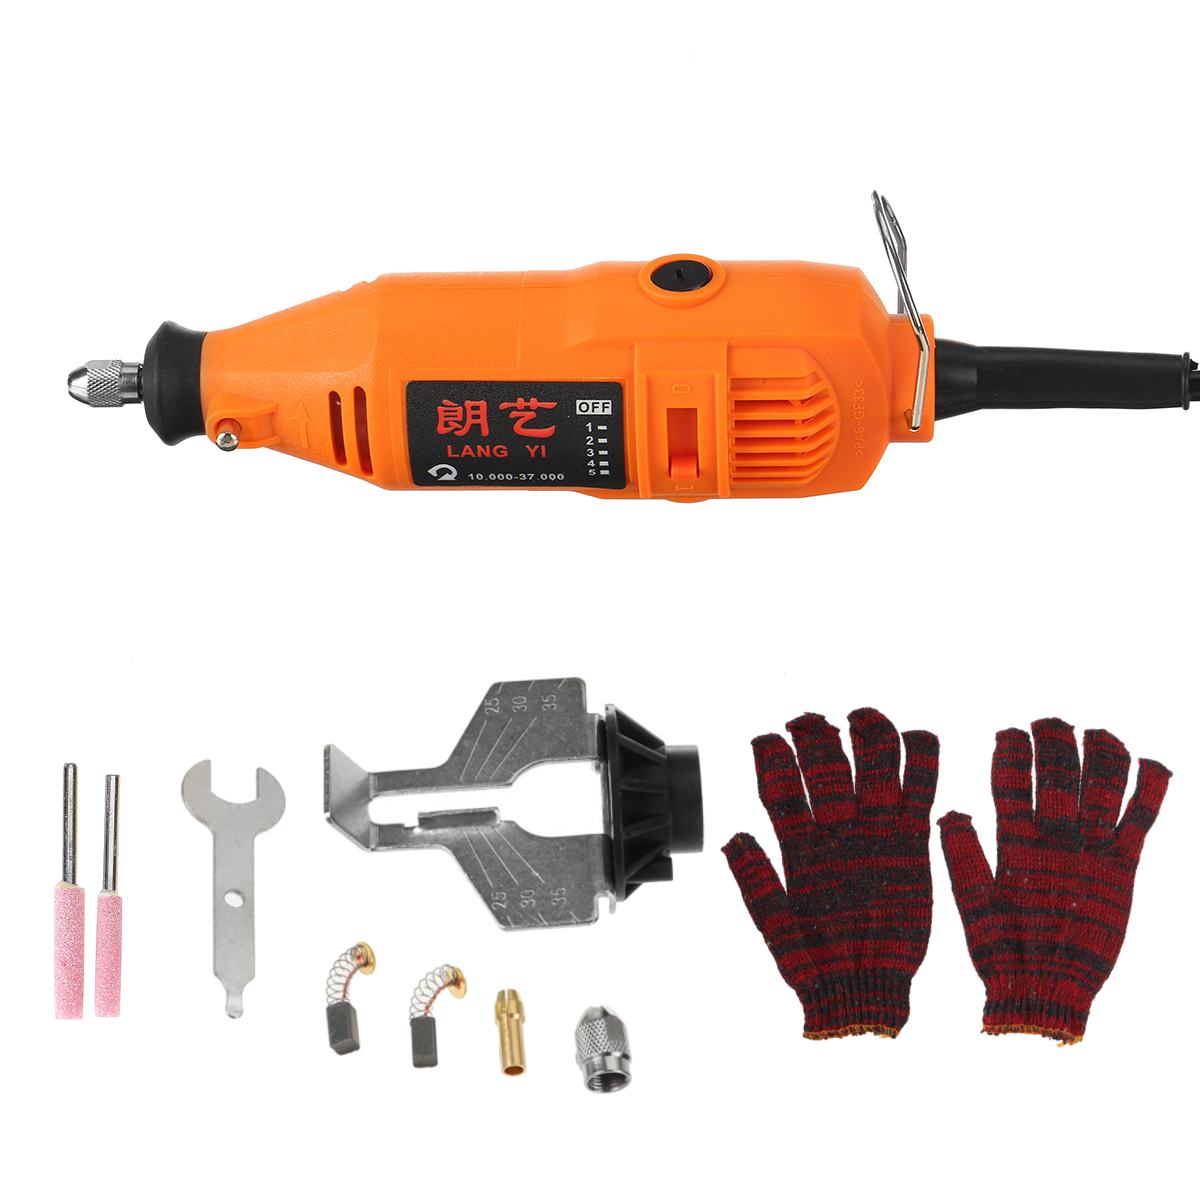 Portable-Chainsaw-Sharpener-Electric-Grinder-Chain-Saw-Grinder-File-Pro-Tools-Set-1729955-12